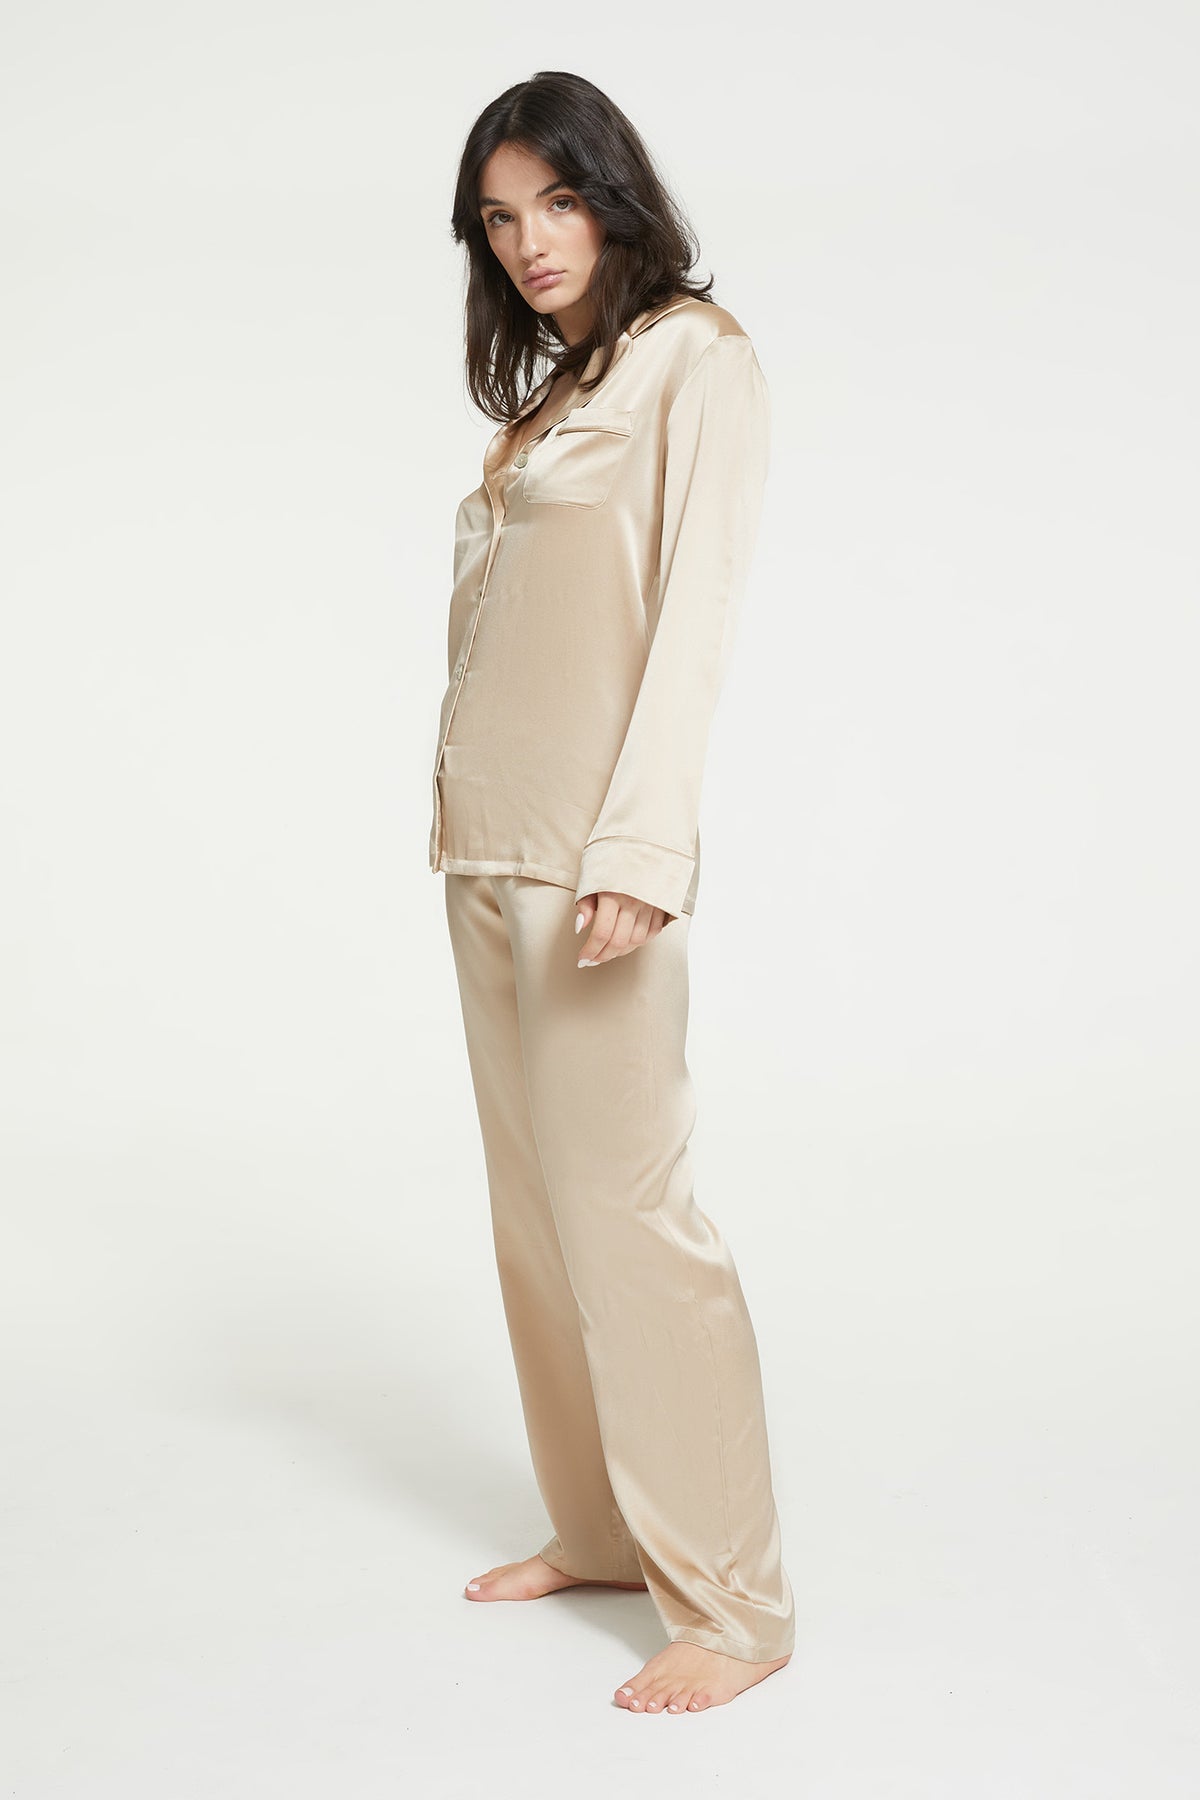 GINIA Fine Finishes pajama in Mink - 100% 19mm Silk Grade 6A